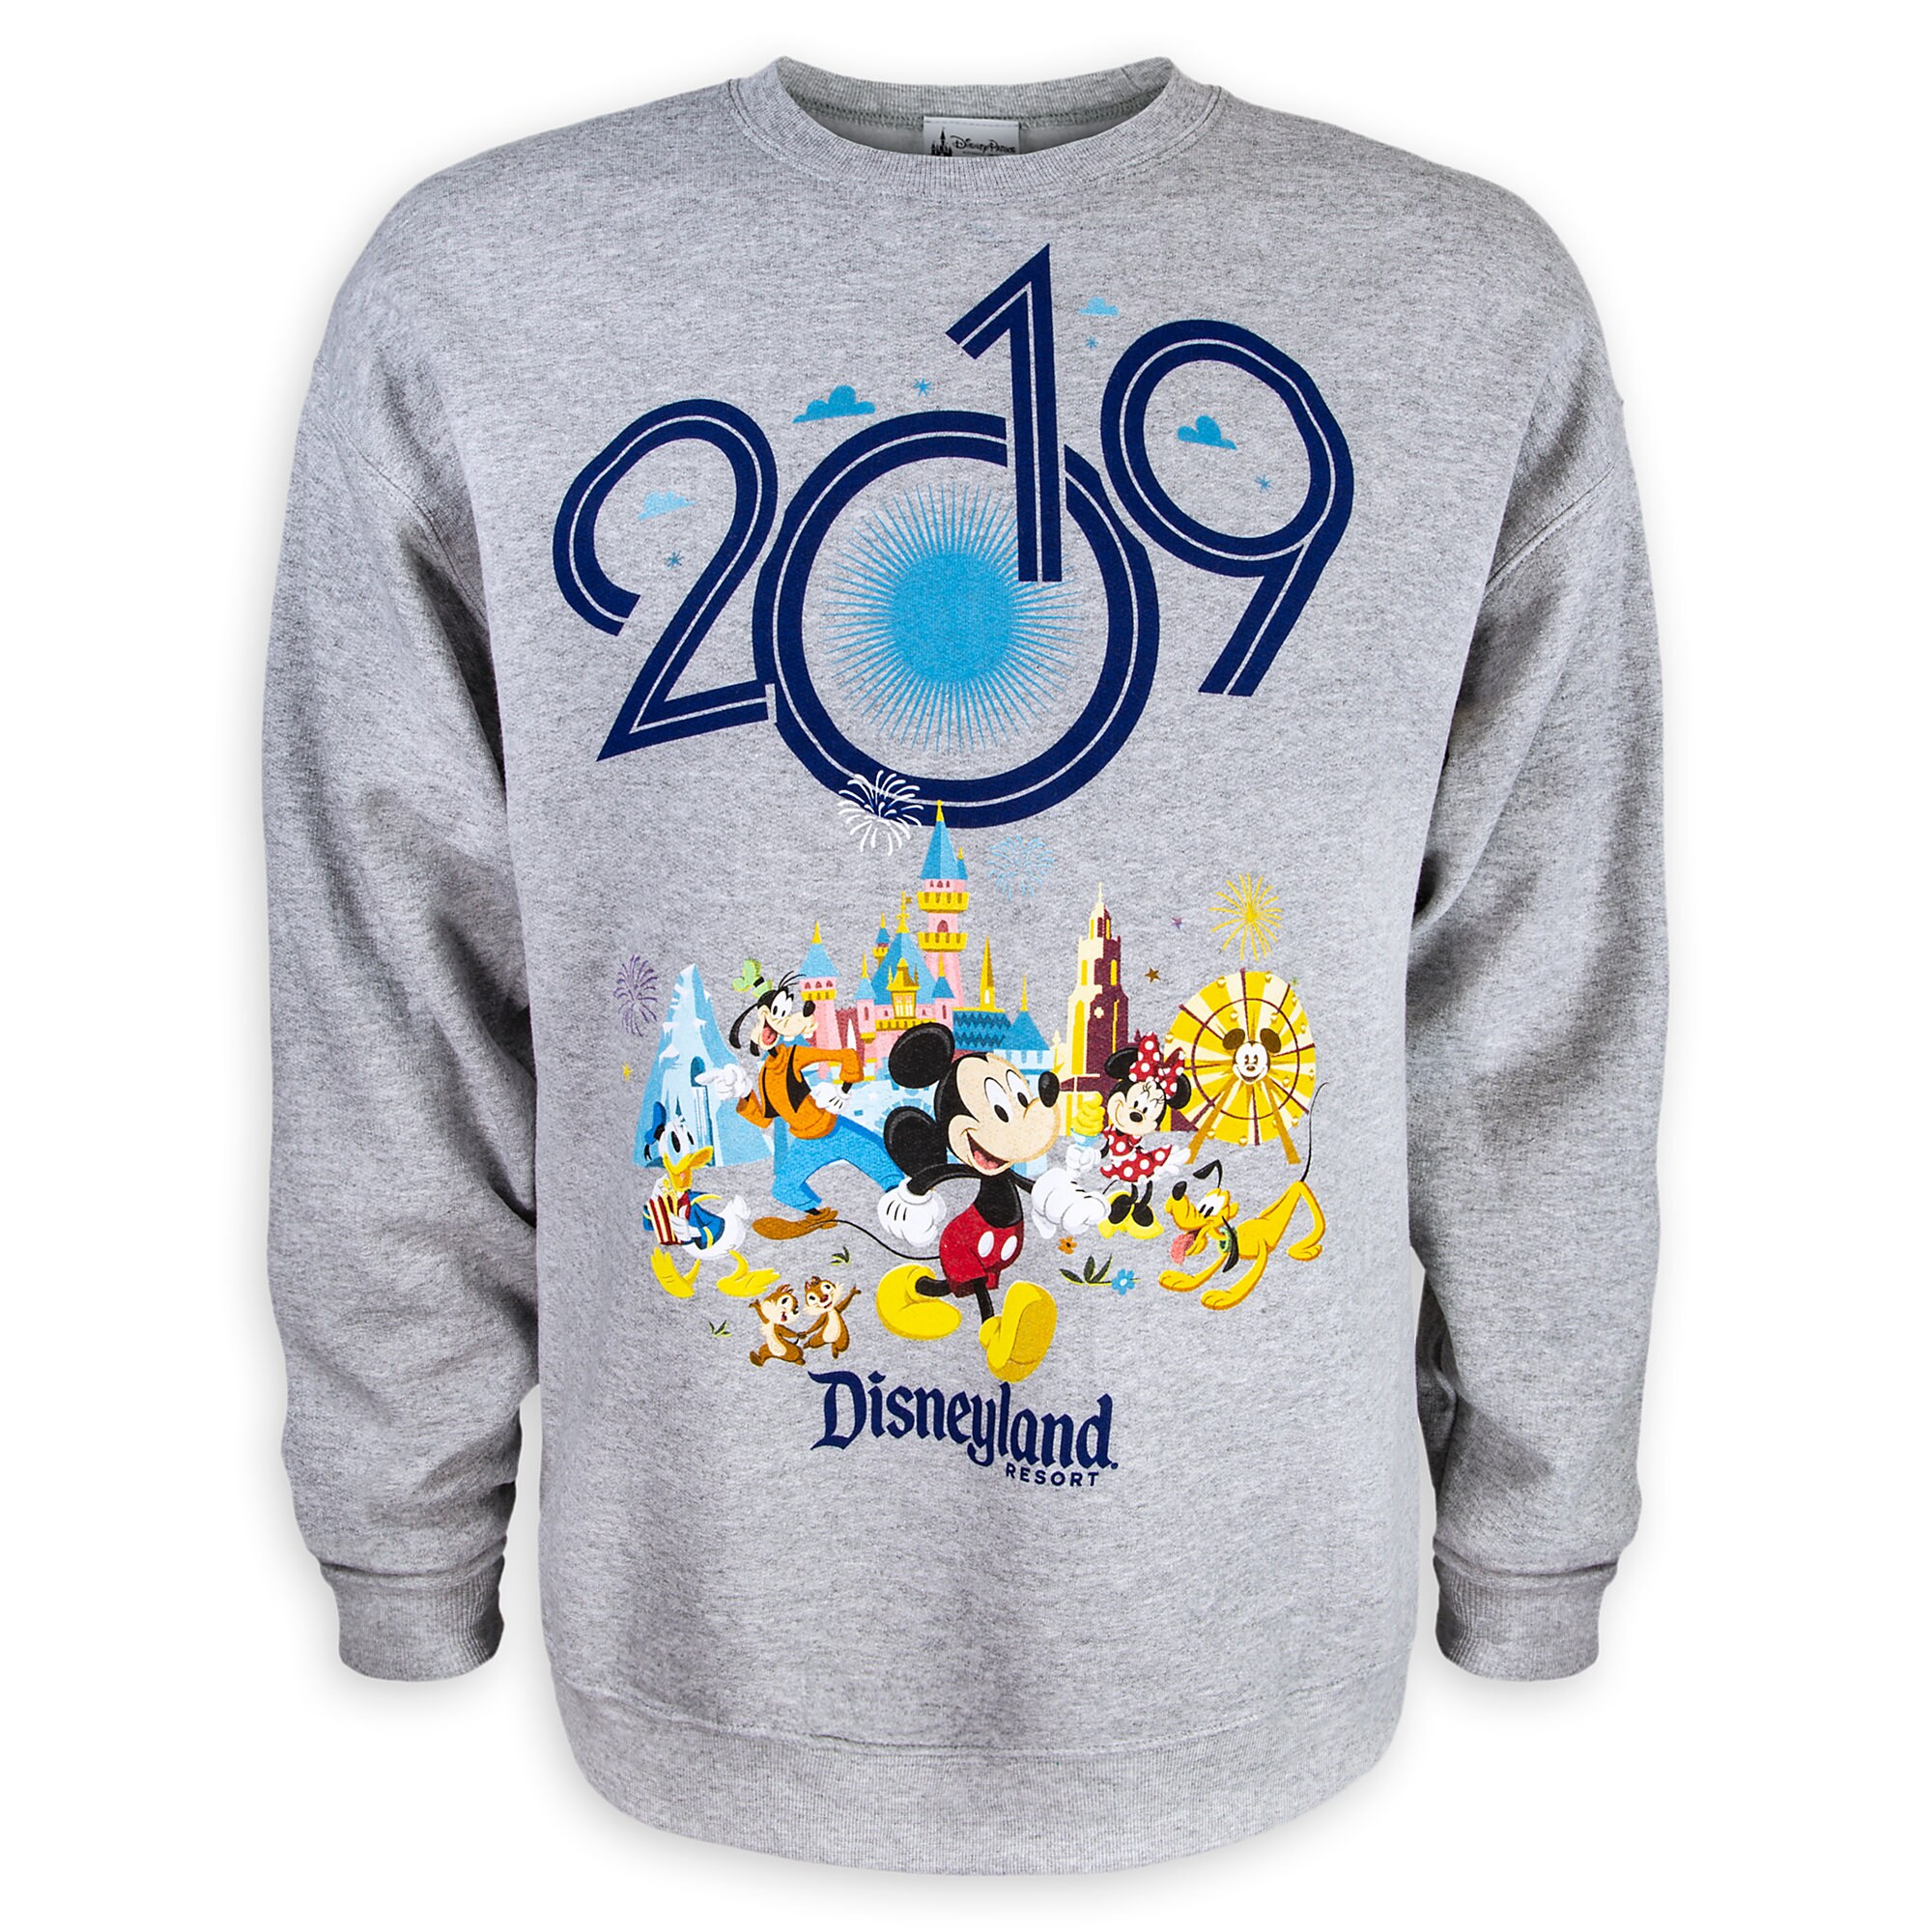 Mickey Mouse and Friends Fleece Sweatshirt for Adults - Disneyland 2019